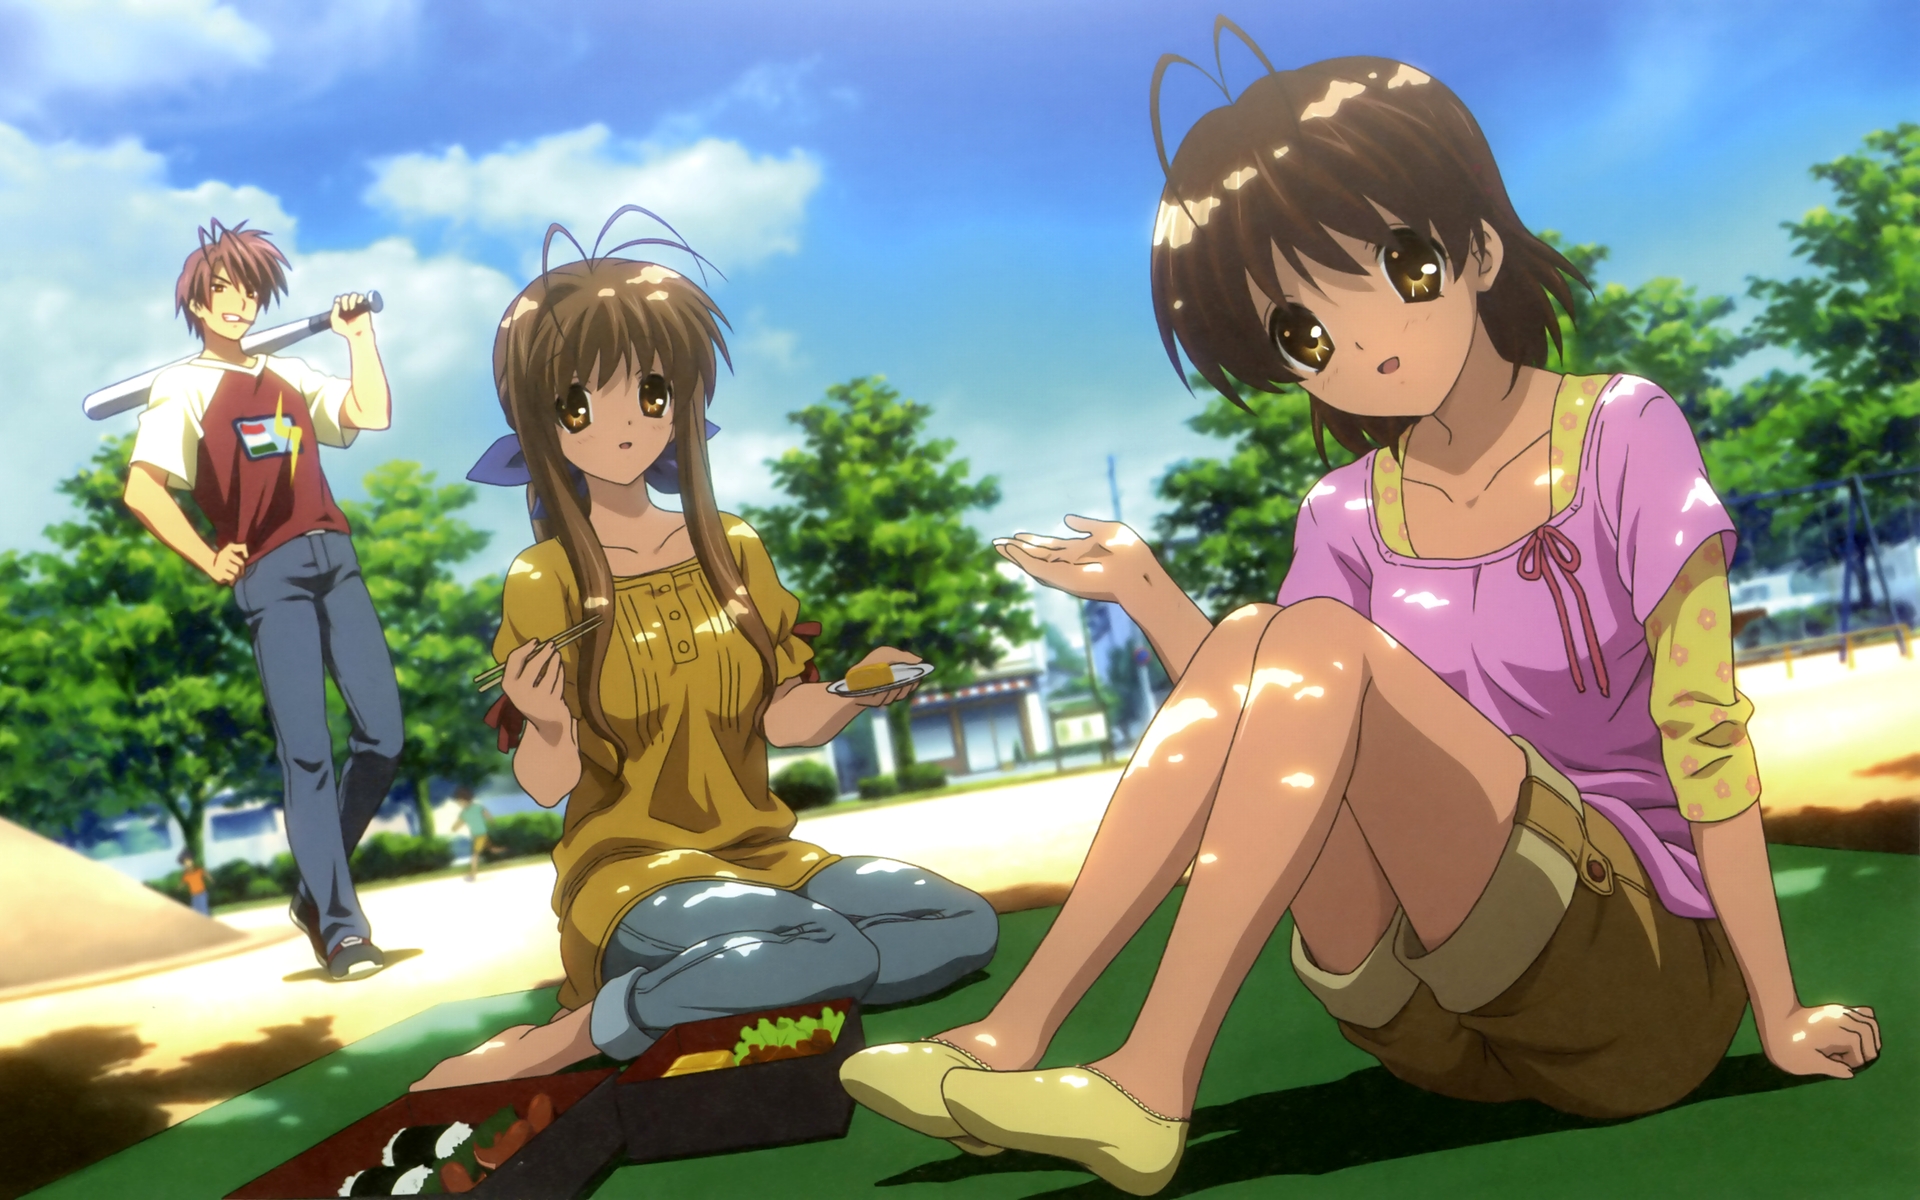 Nagisa, Akio, and Sanae Furukawa, a family of characters from a show or game.